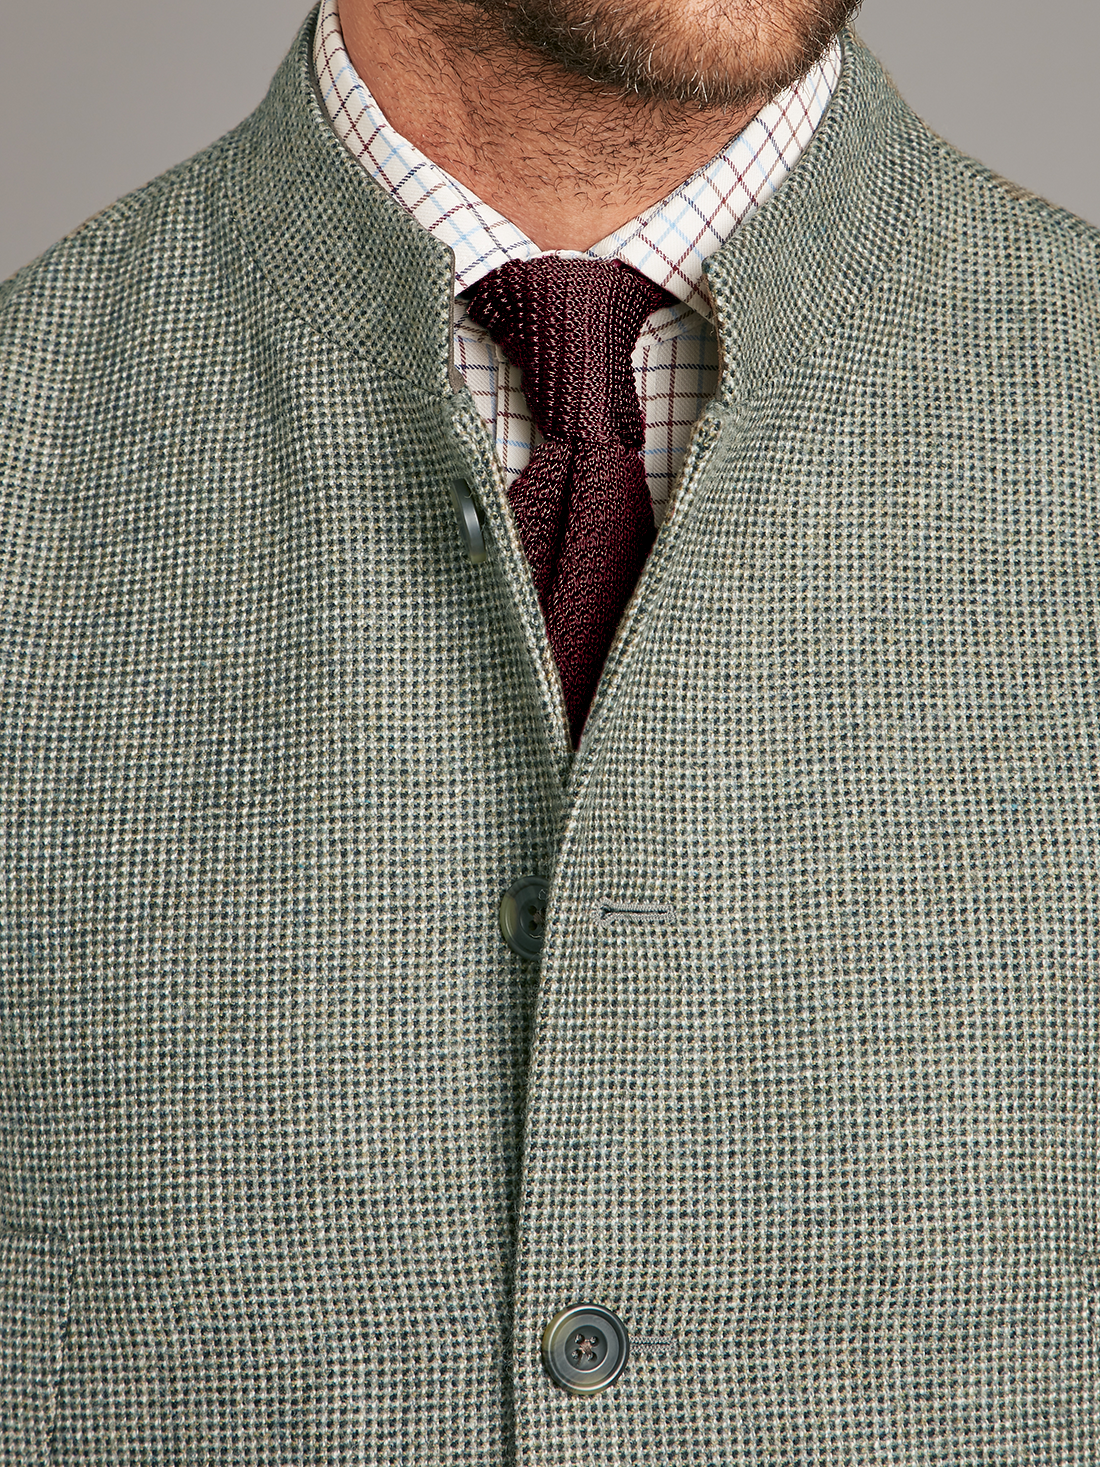 Limited Edition Gilet – Nailhead Tweed - Sage Green